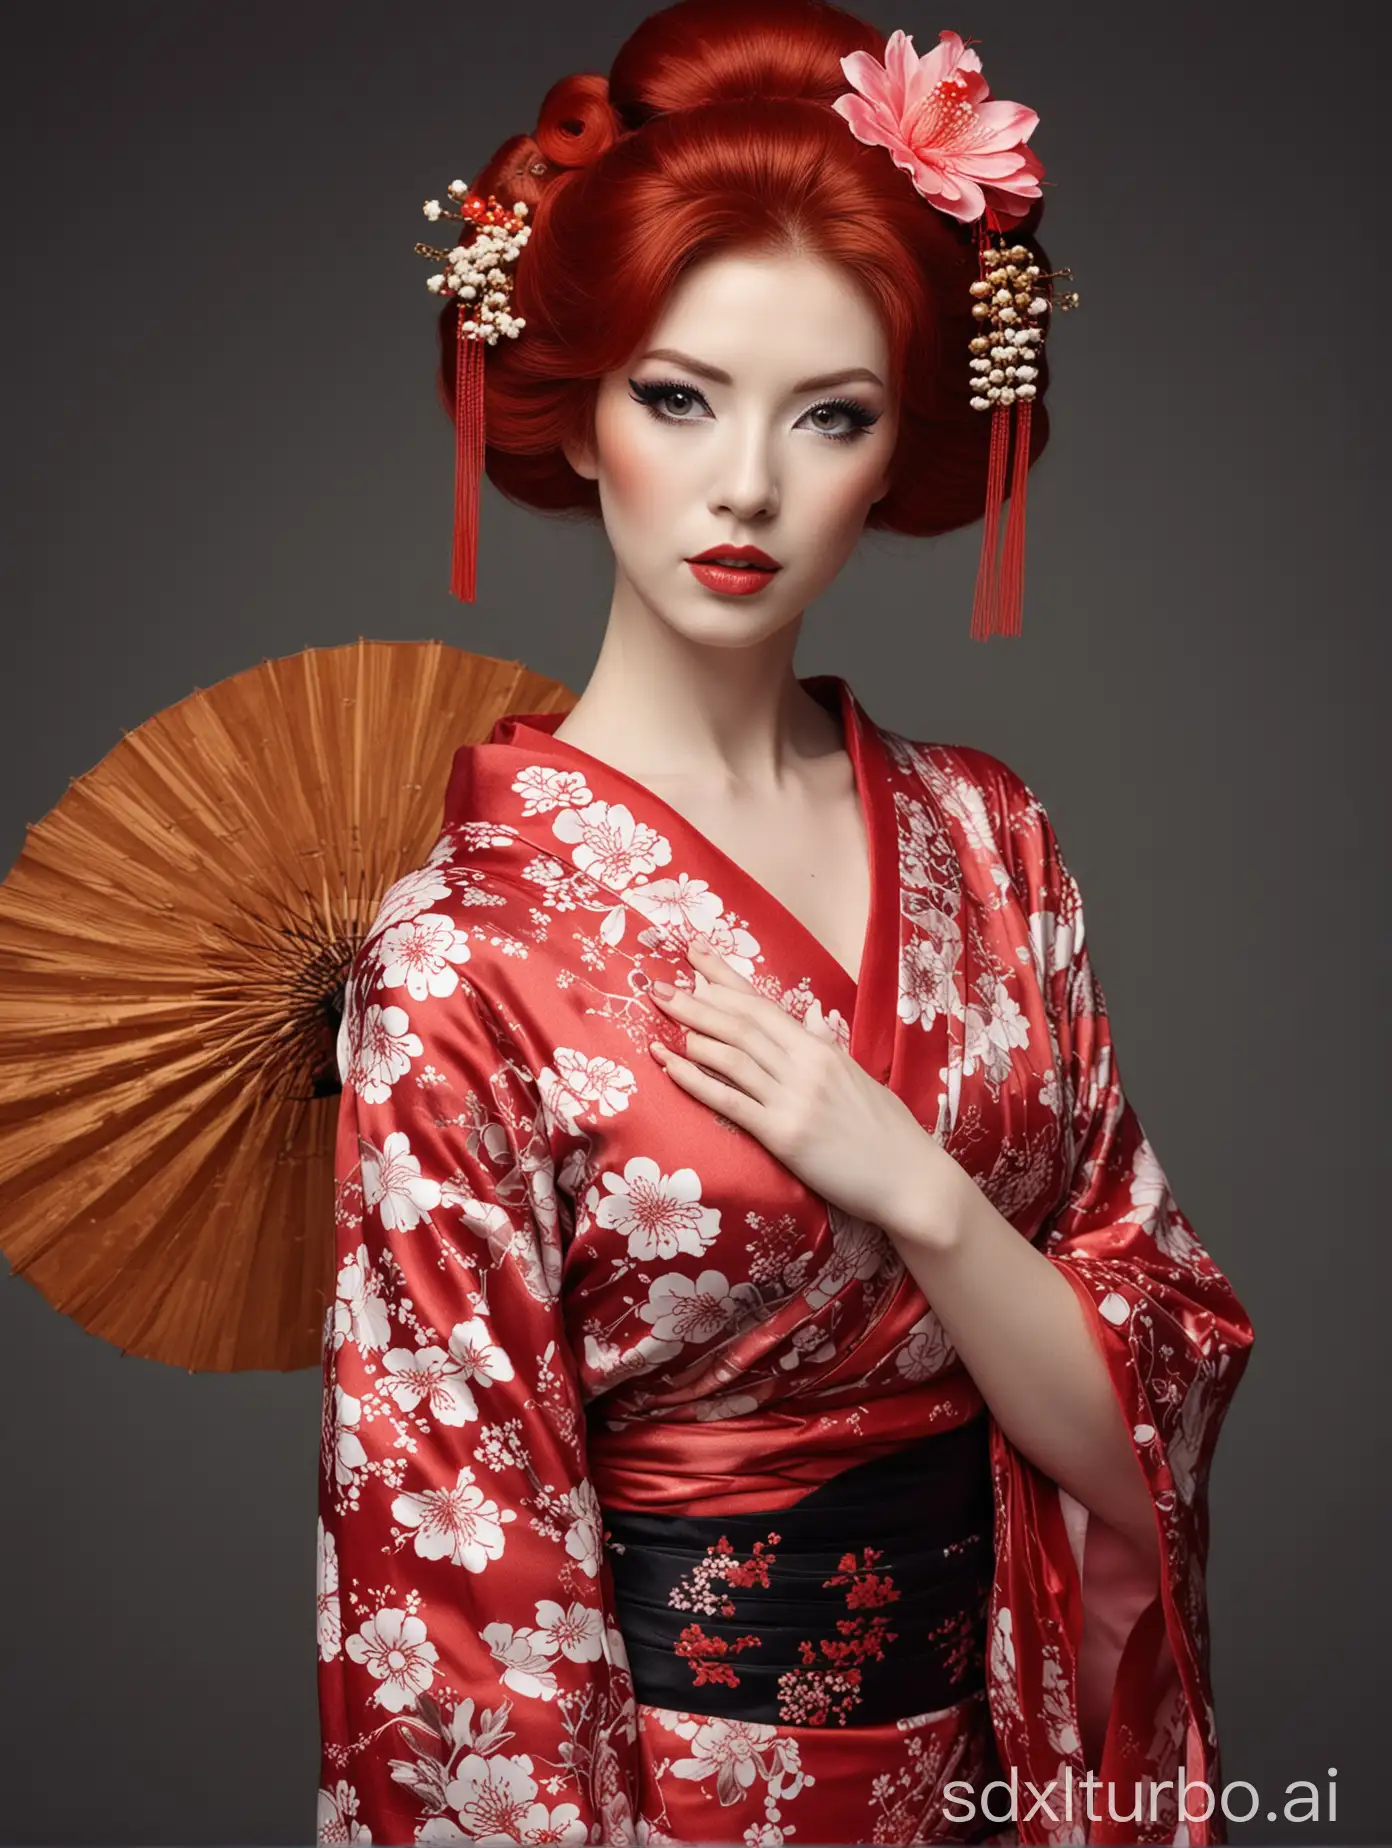 Sensual-Redhead-Geisha-in-Traditional-Attire